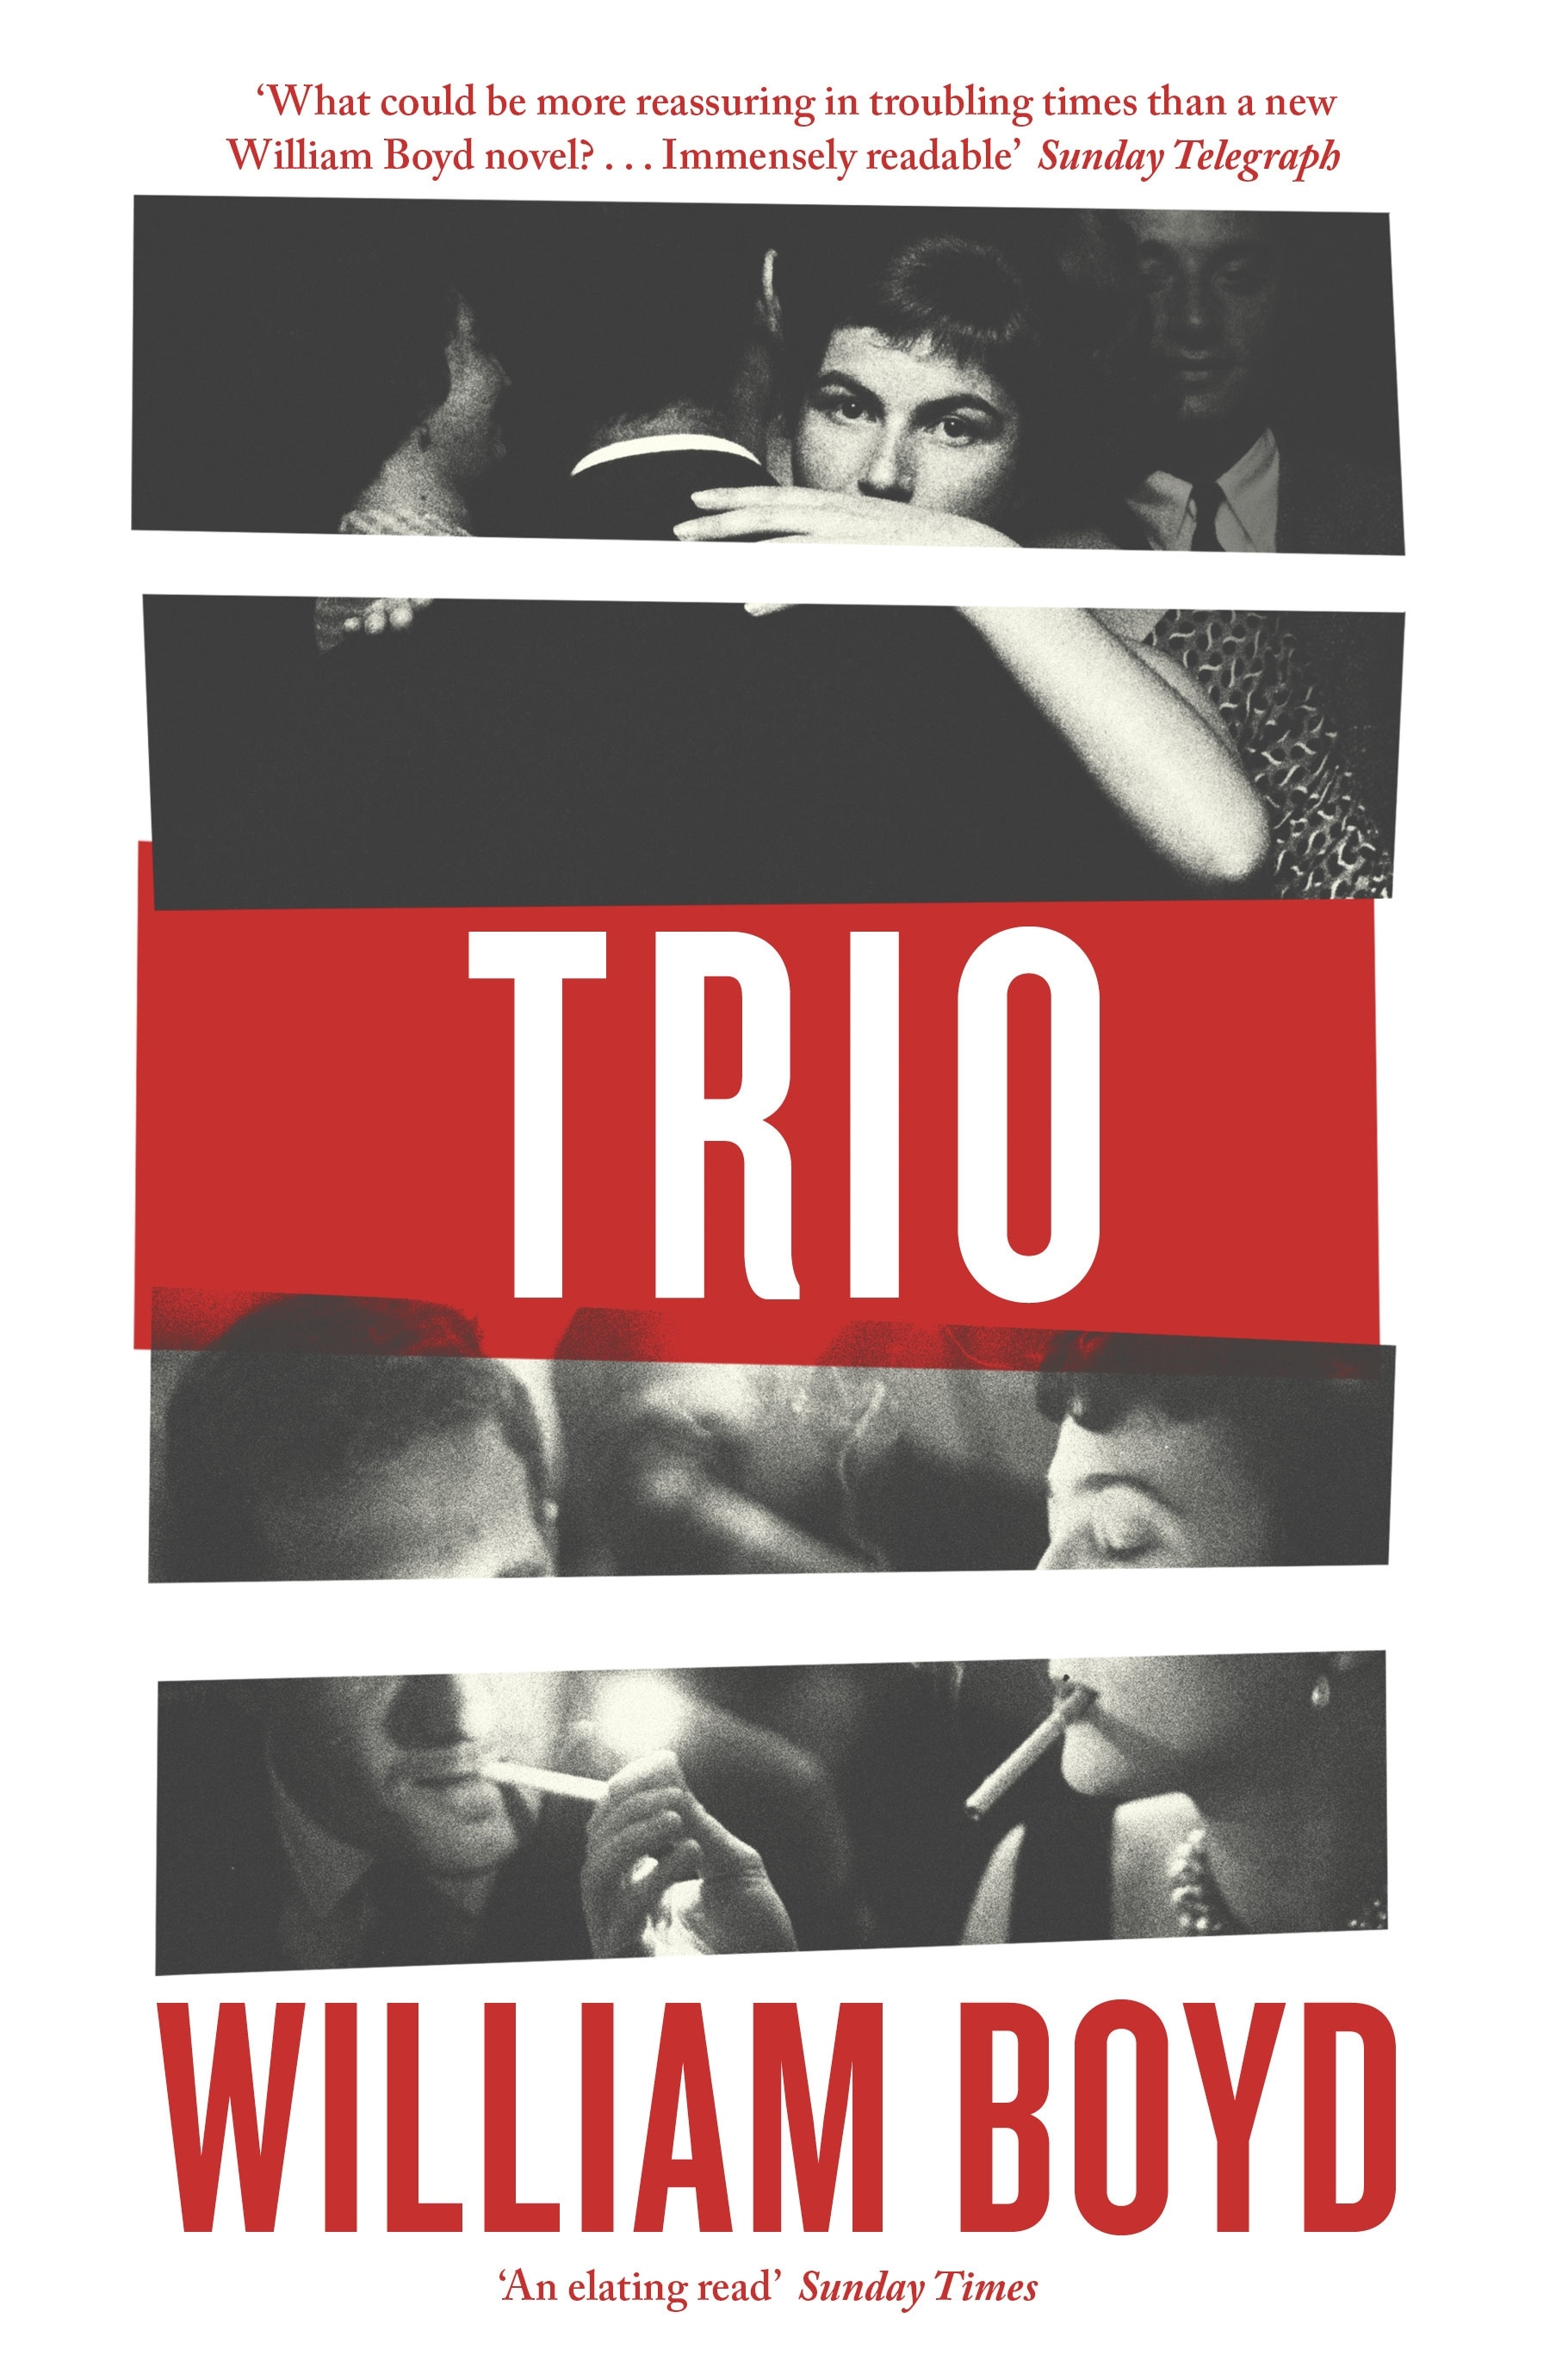 Book “Trio” by William Boyd — October 8, 2020